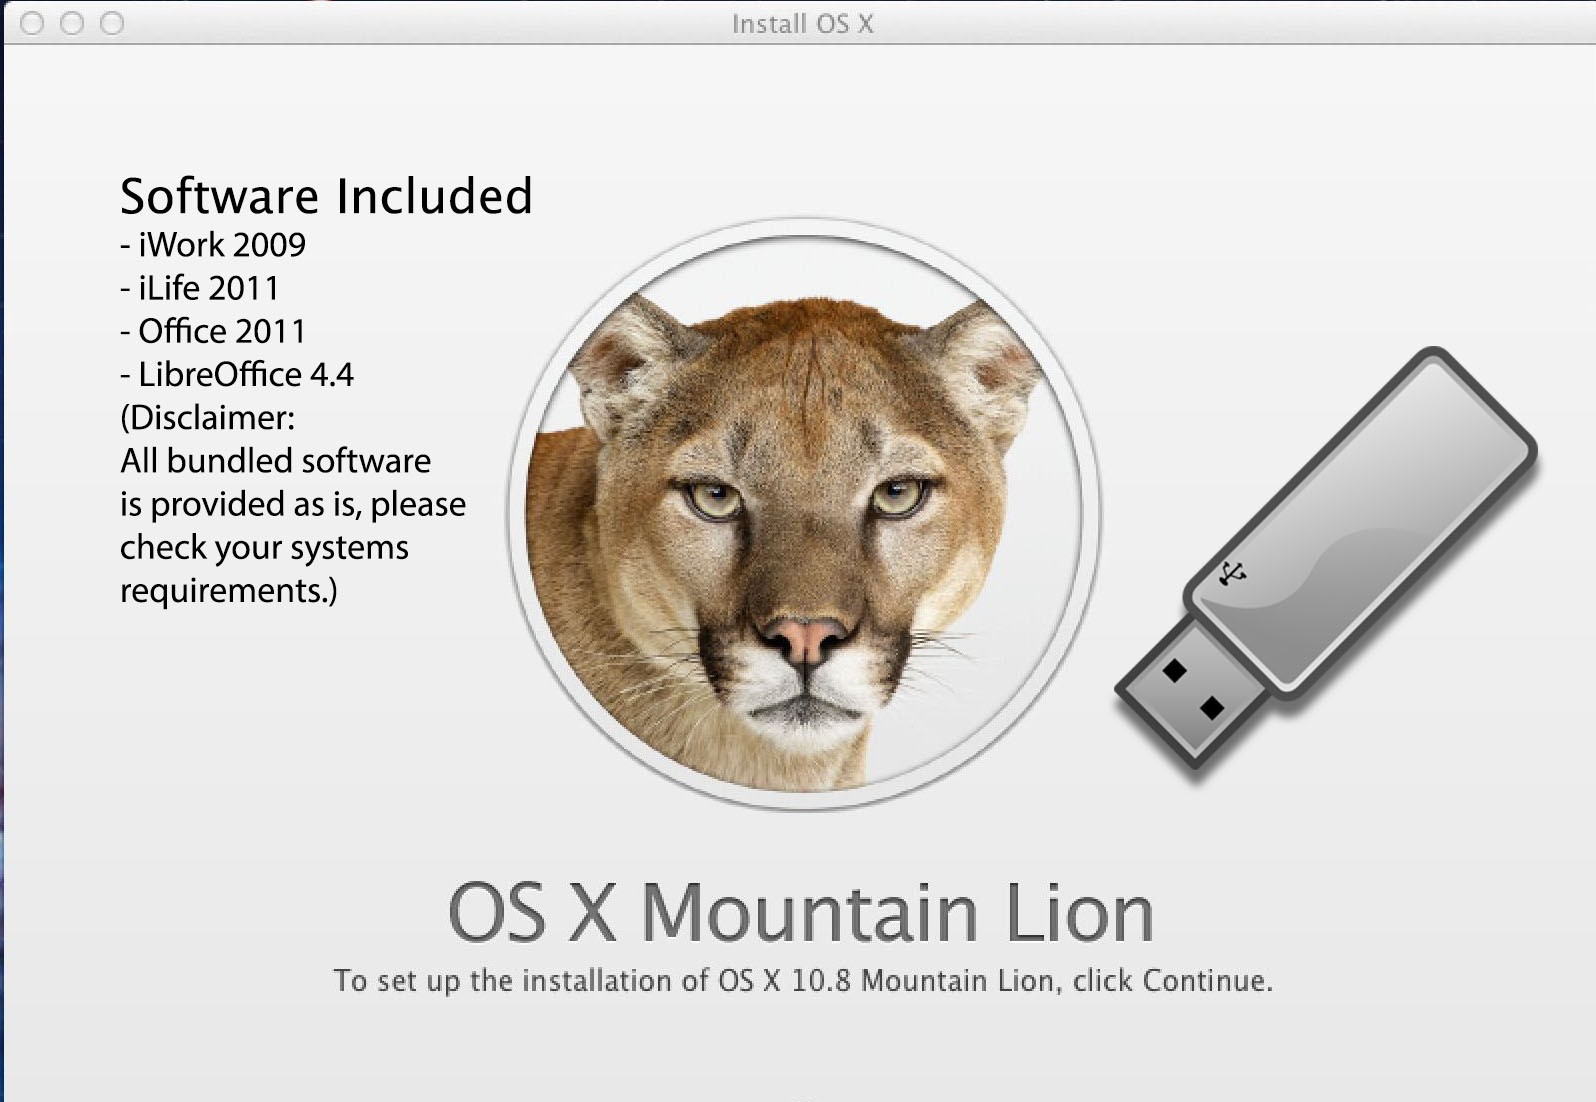 Create Bootable Copies Of The OS X Mountain Lion Installer